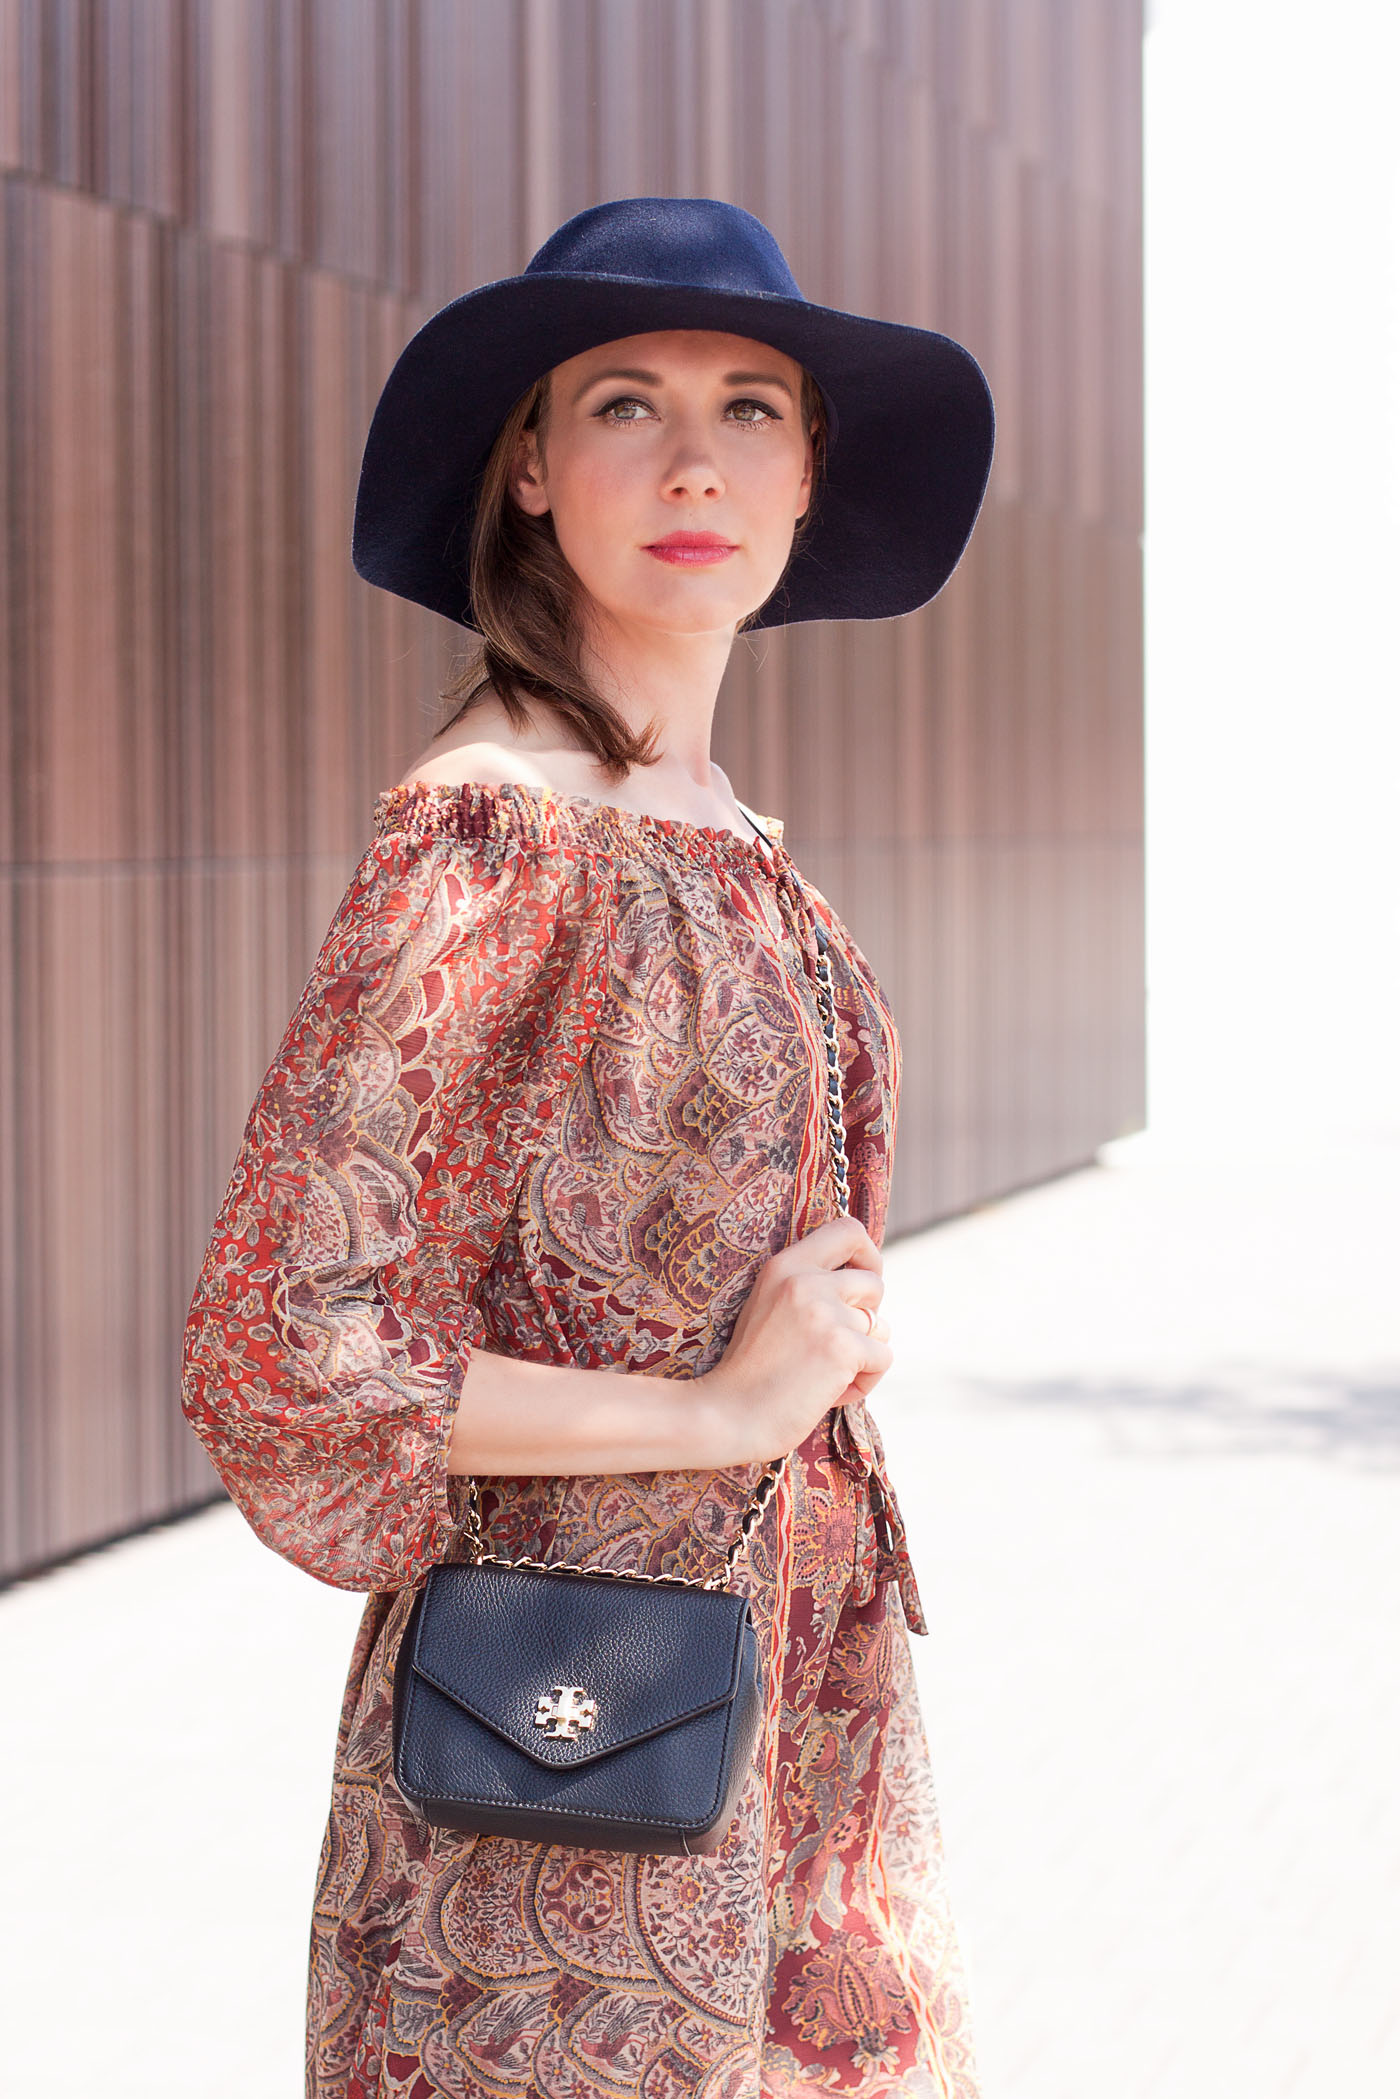 Zara_printed_dress_toryburch_boho_hat_fashionblog_2b